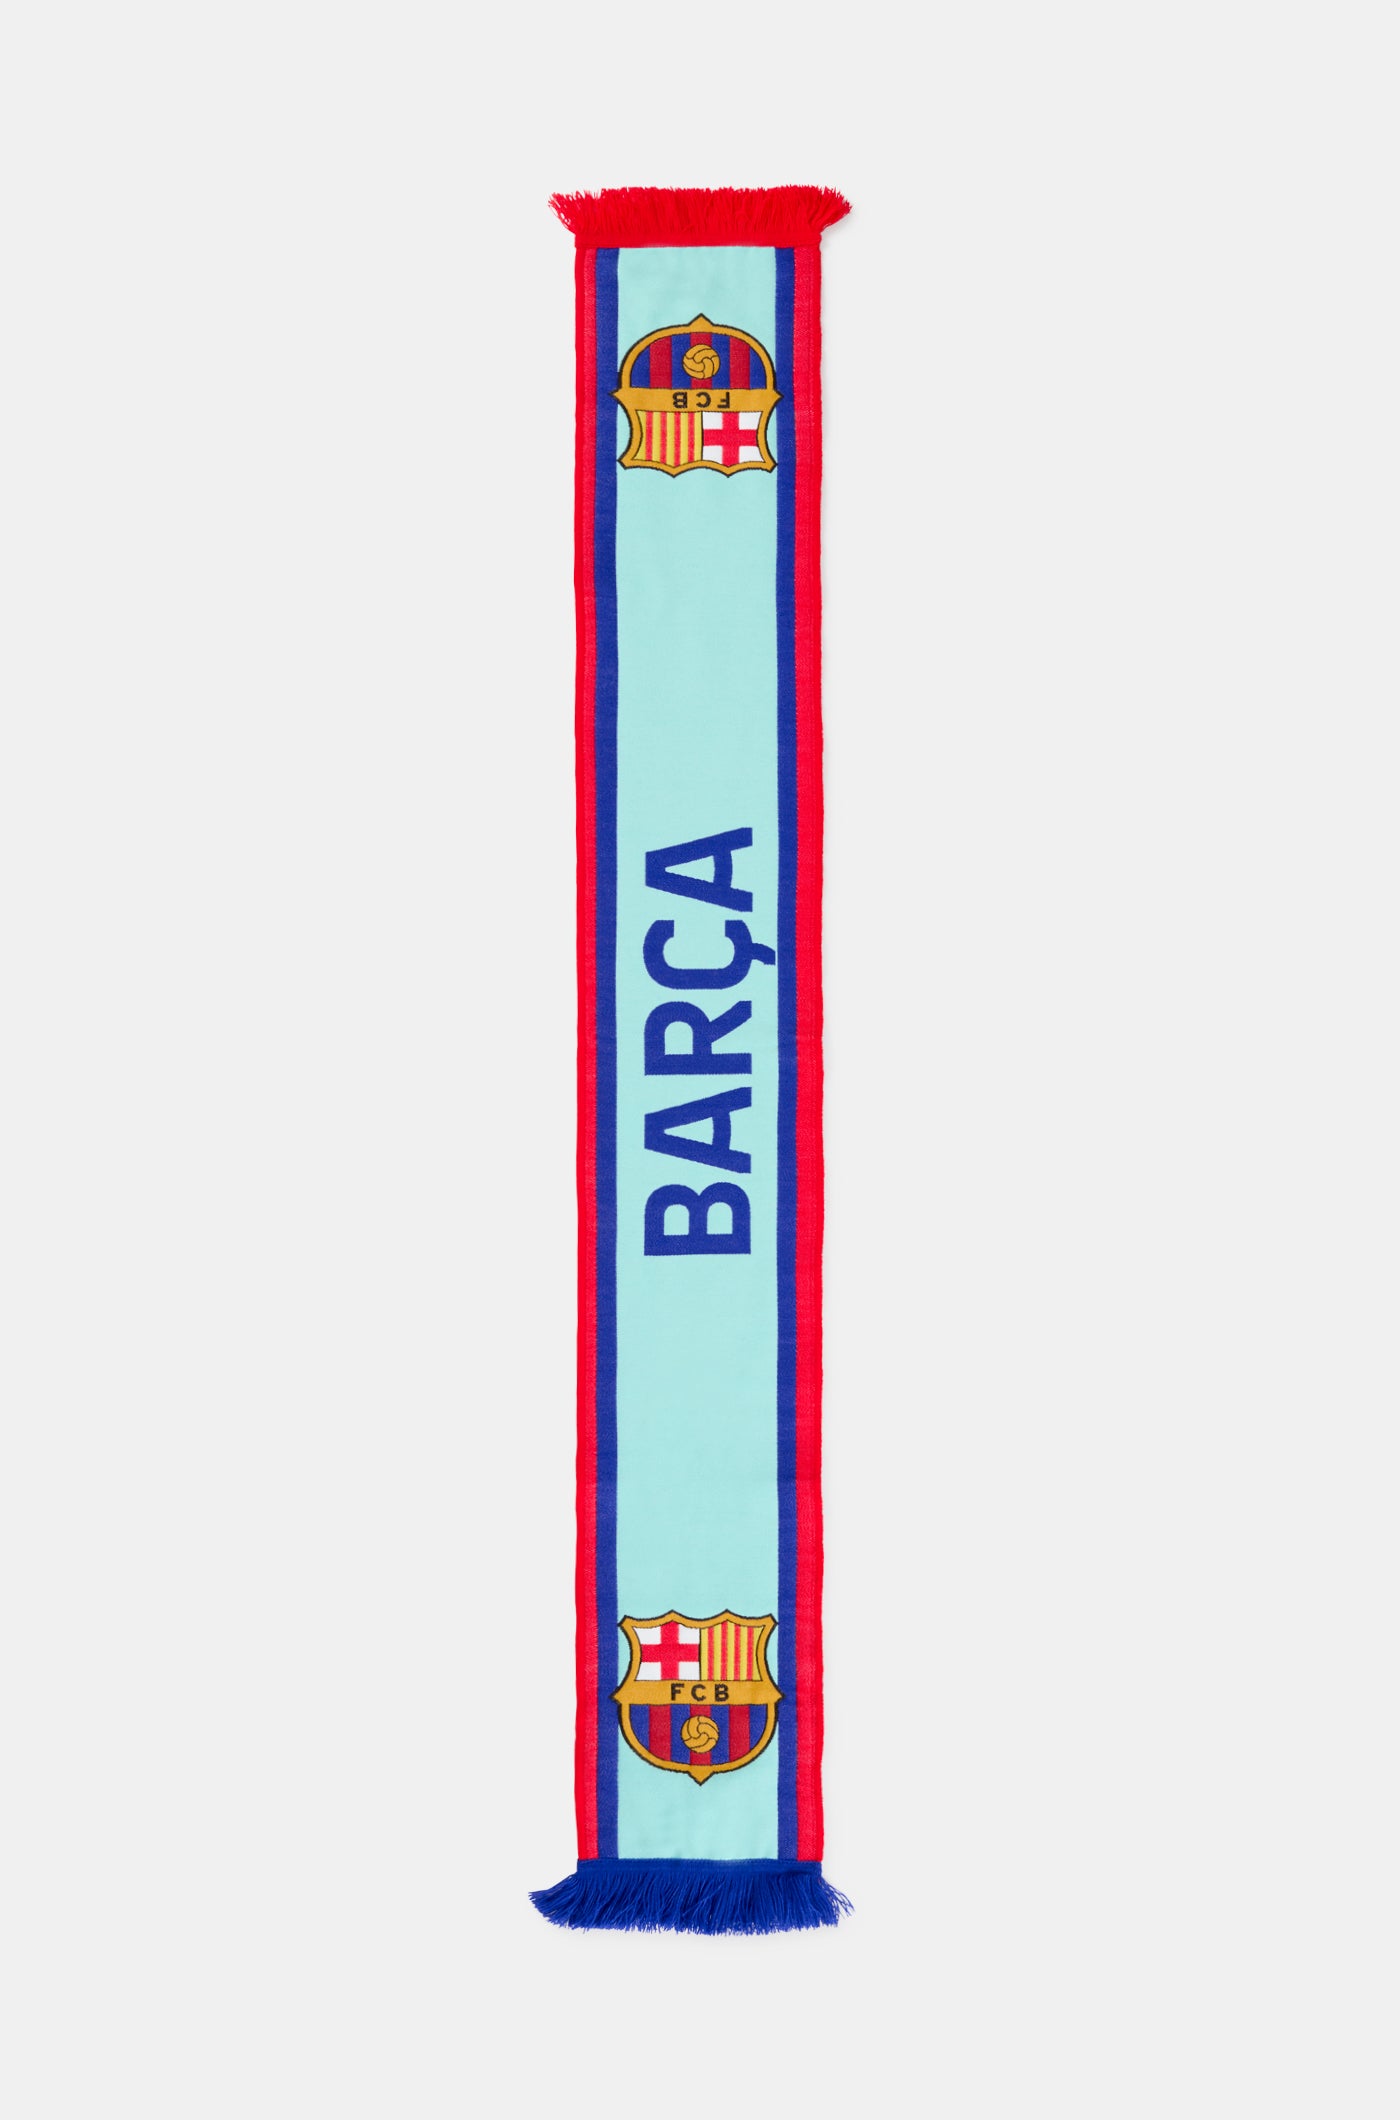 FC Barcelona scarf third 23/24